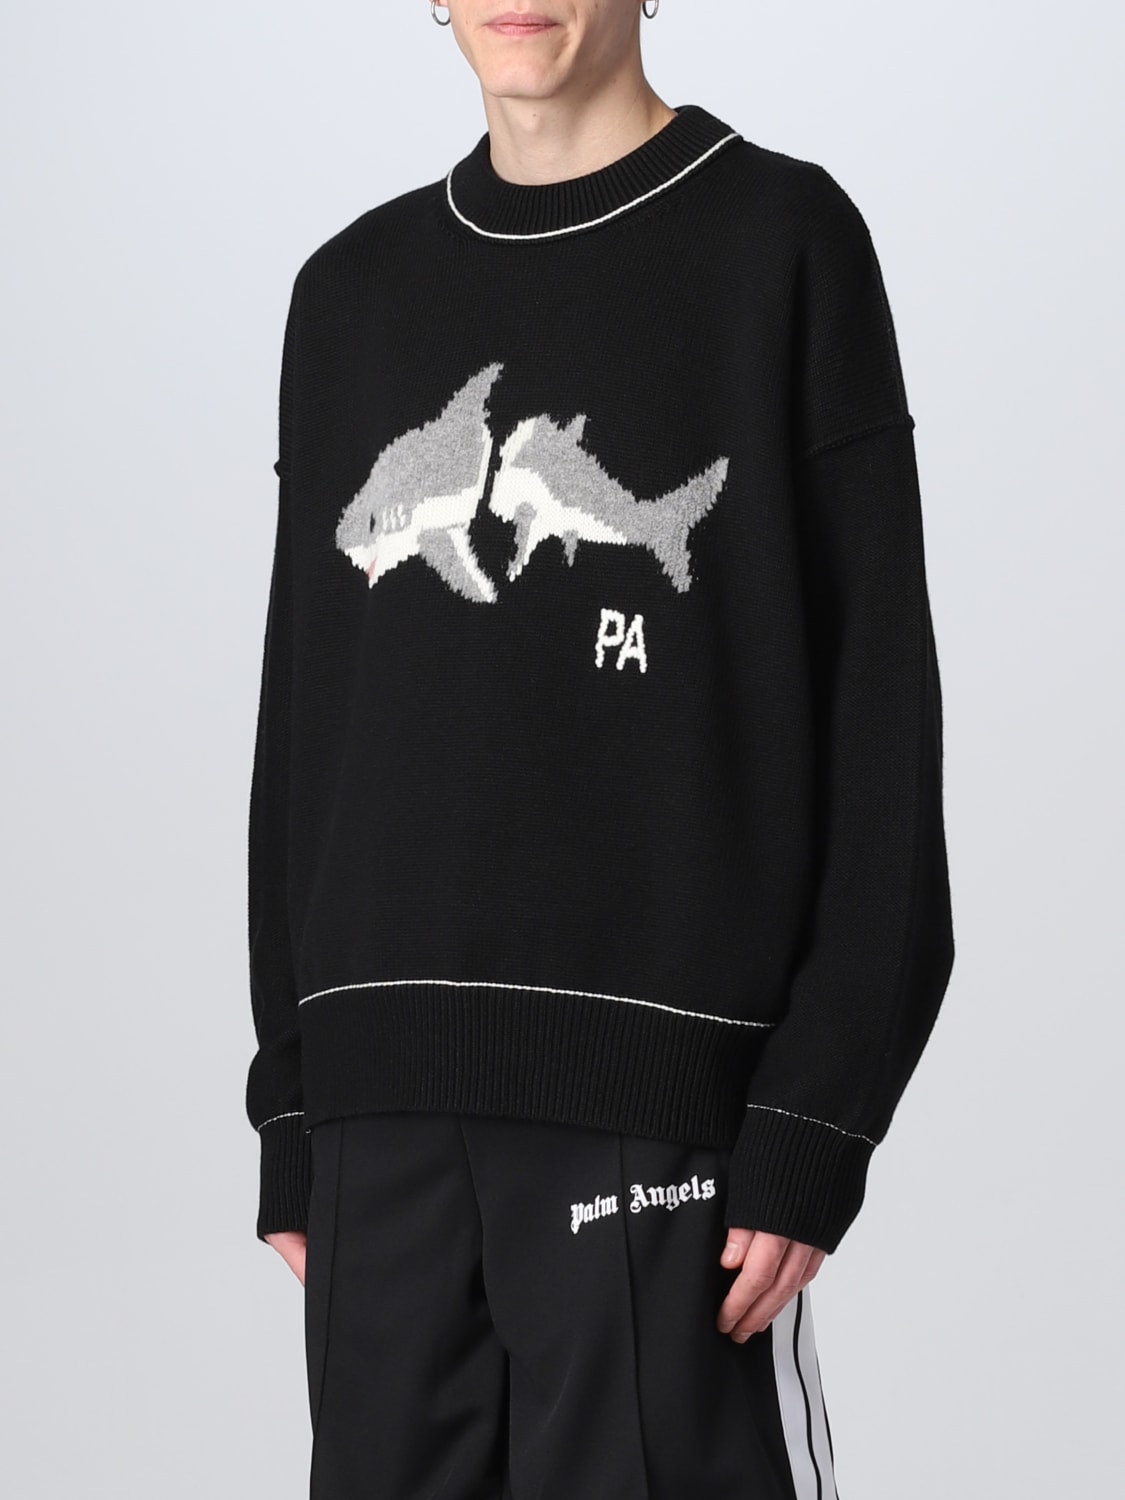 Palm Angels Black Shark Sweater